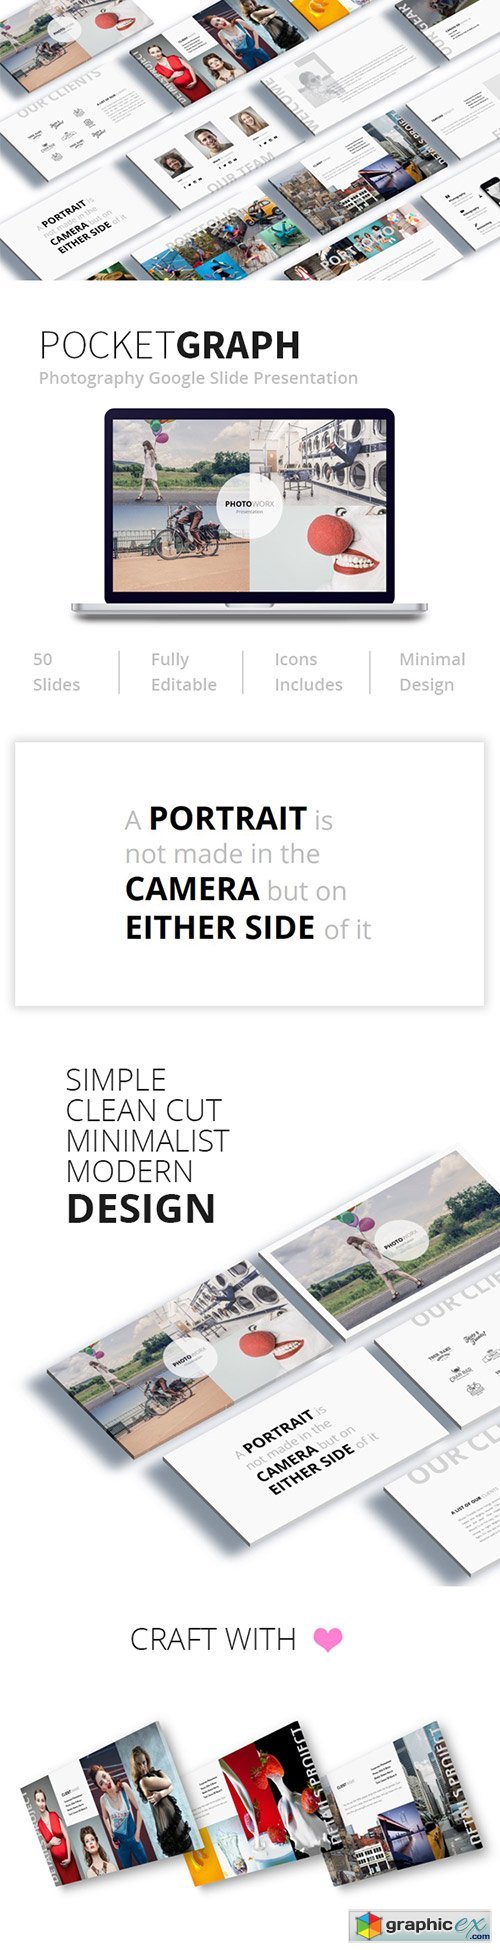 Pocketgraph Photography Google Slide Presentation